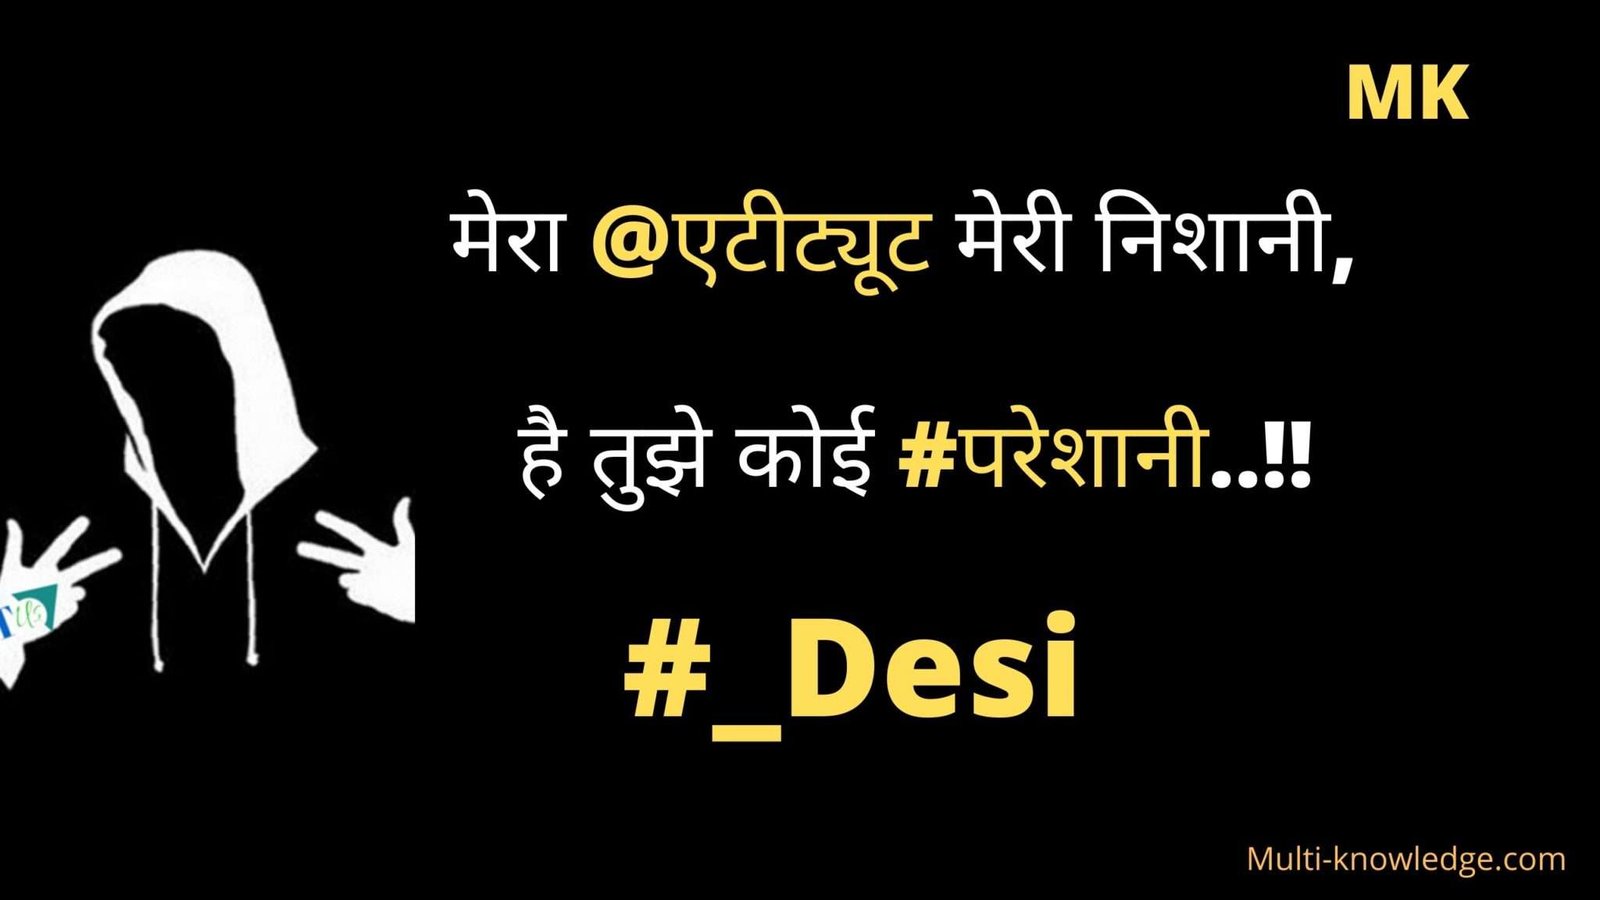 Desi Jatt status in Hindi by multi-knowledge.com